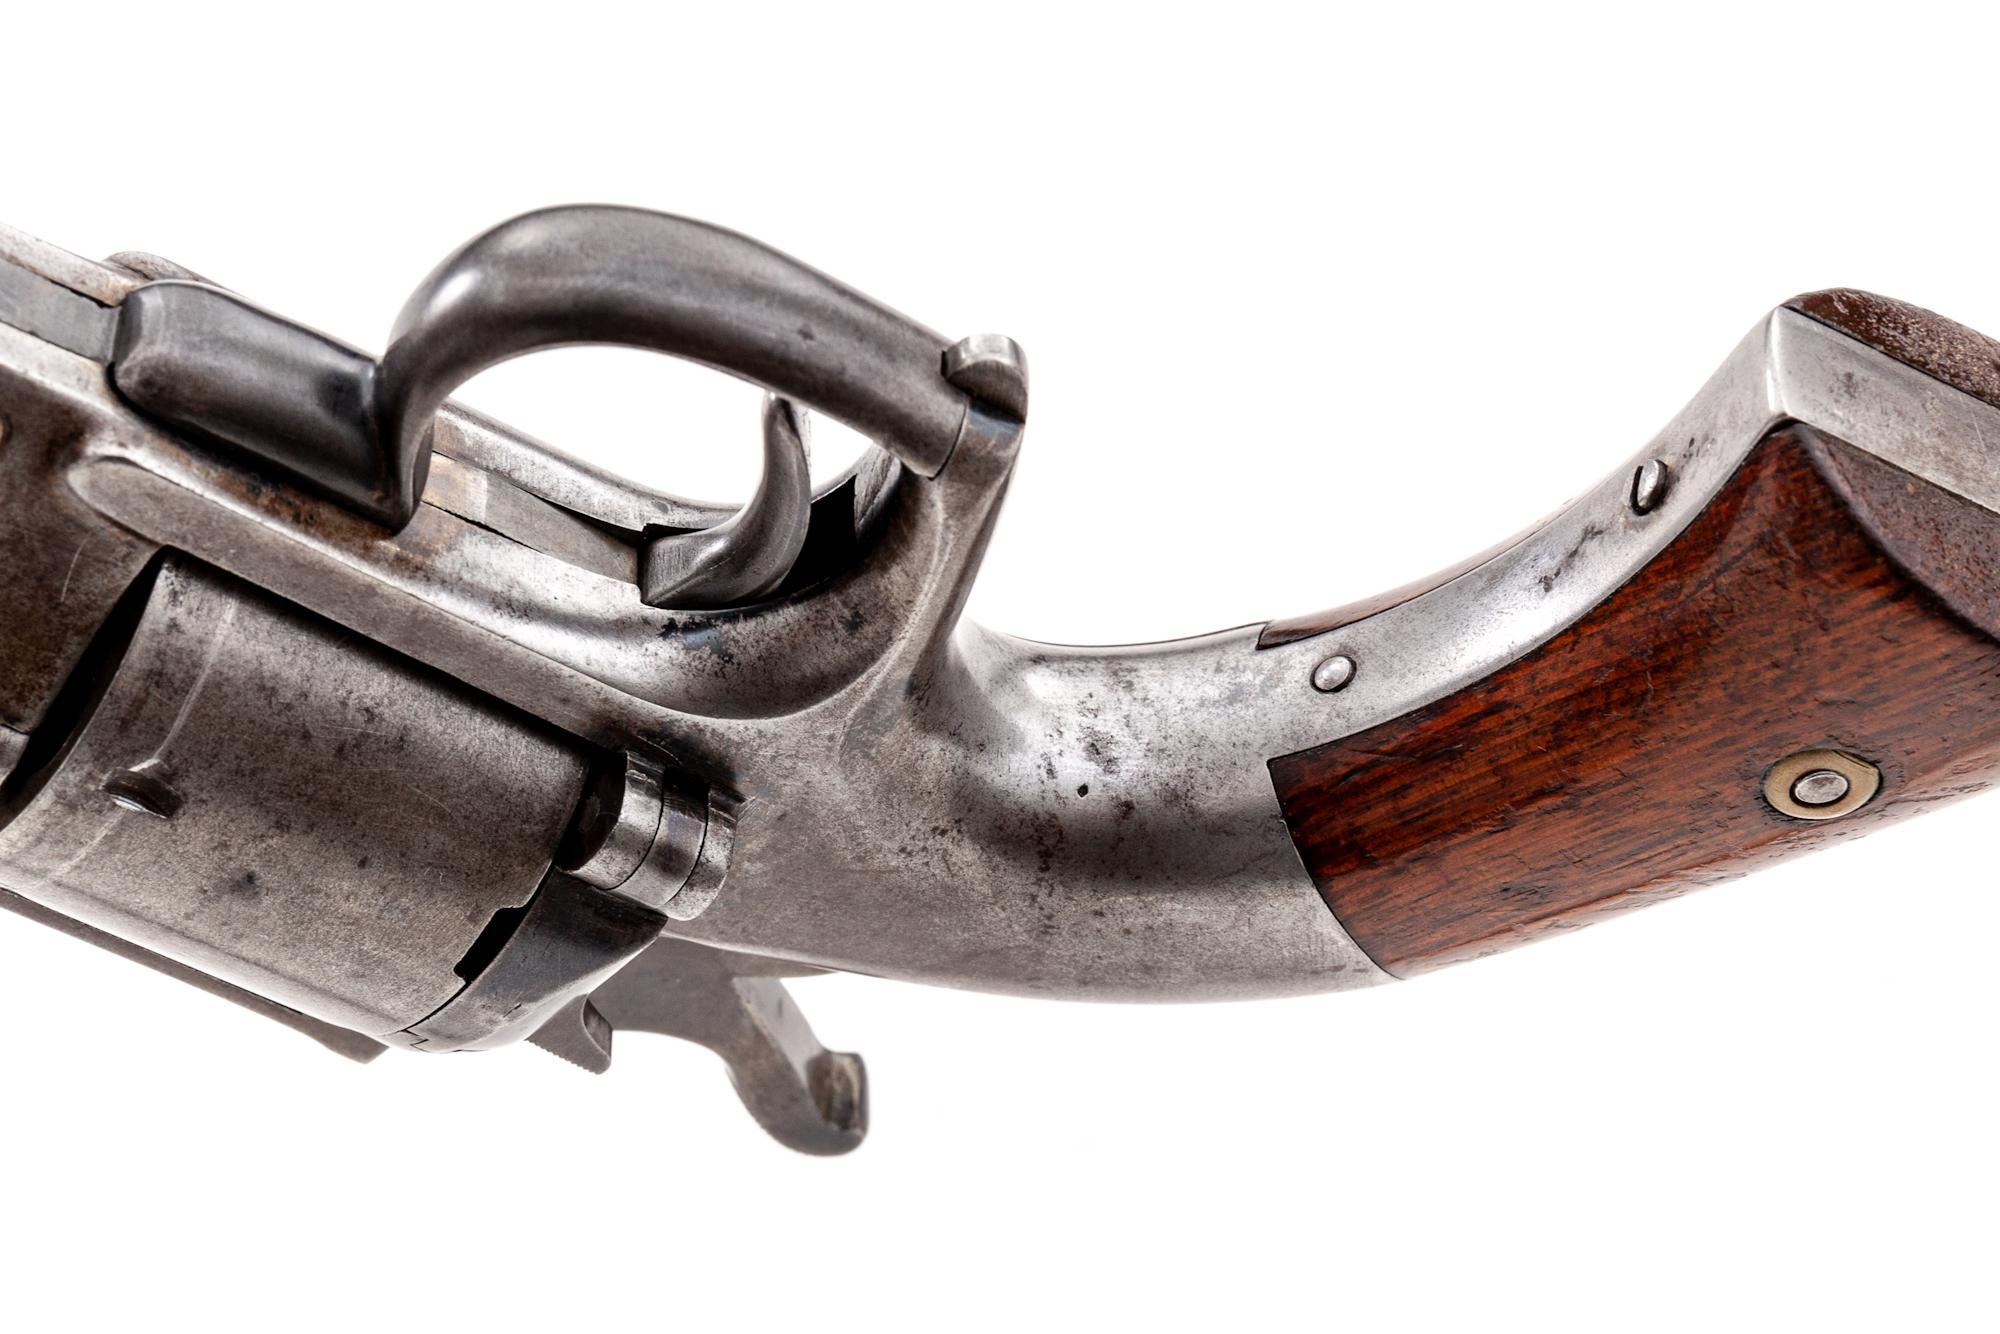 Very Rare Allen & Wheelock Navy Revolver